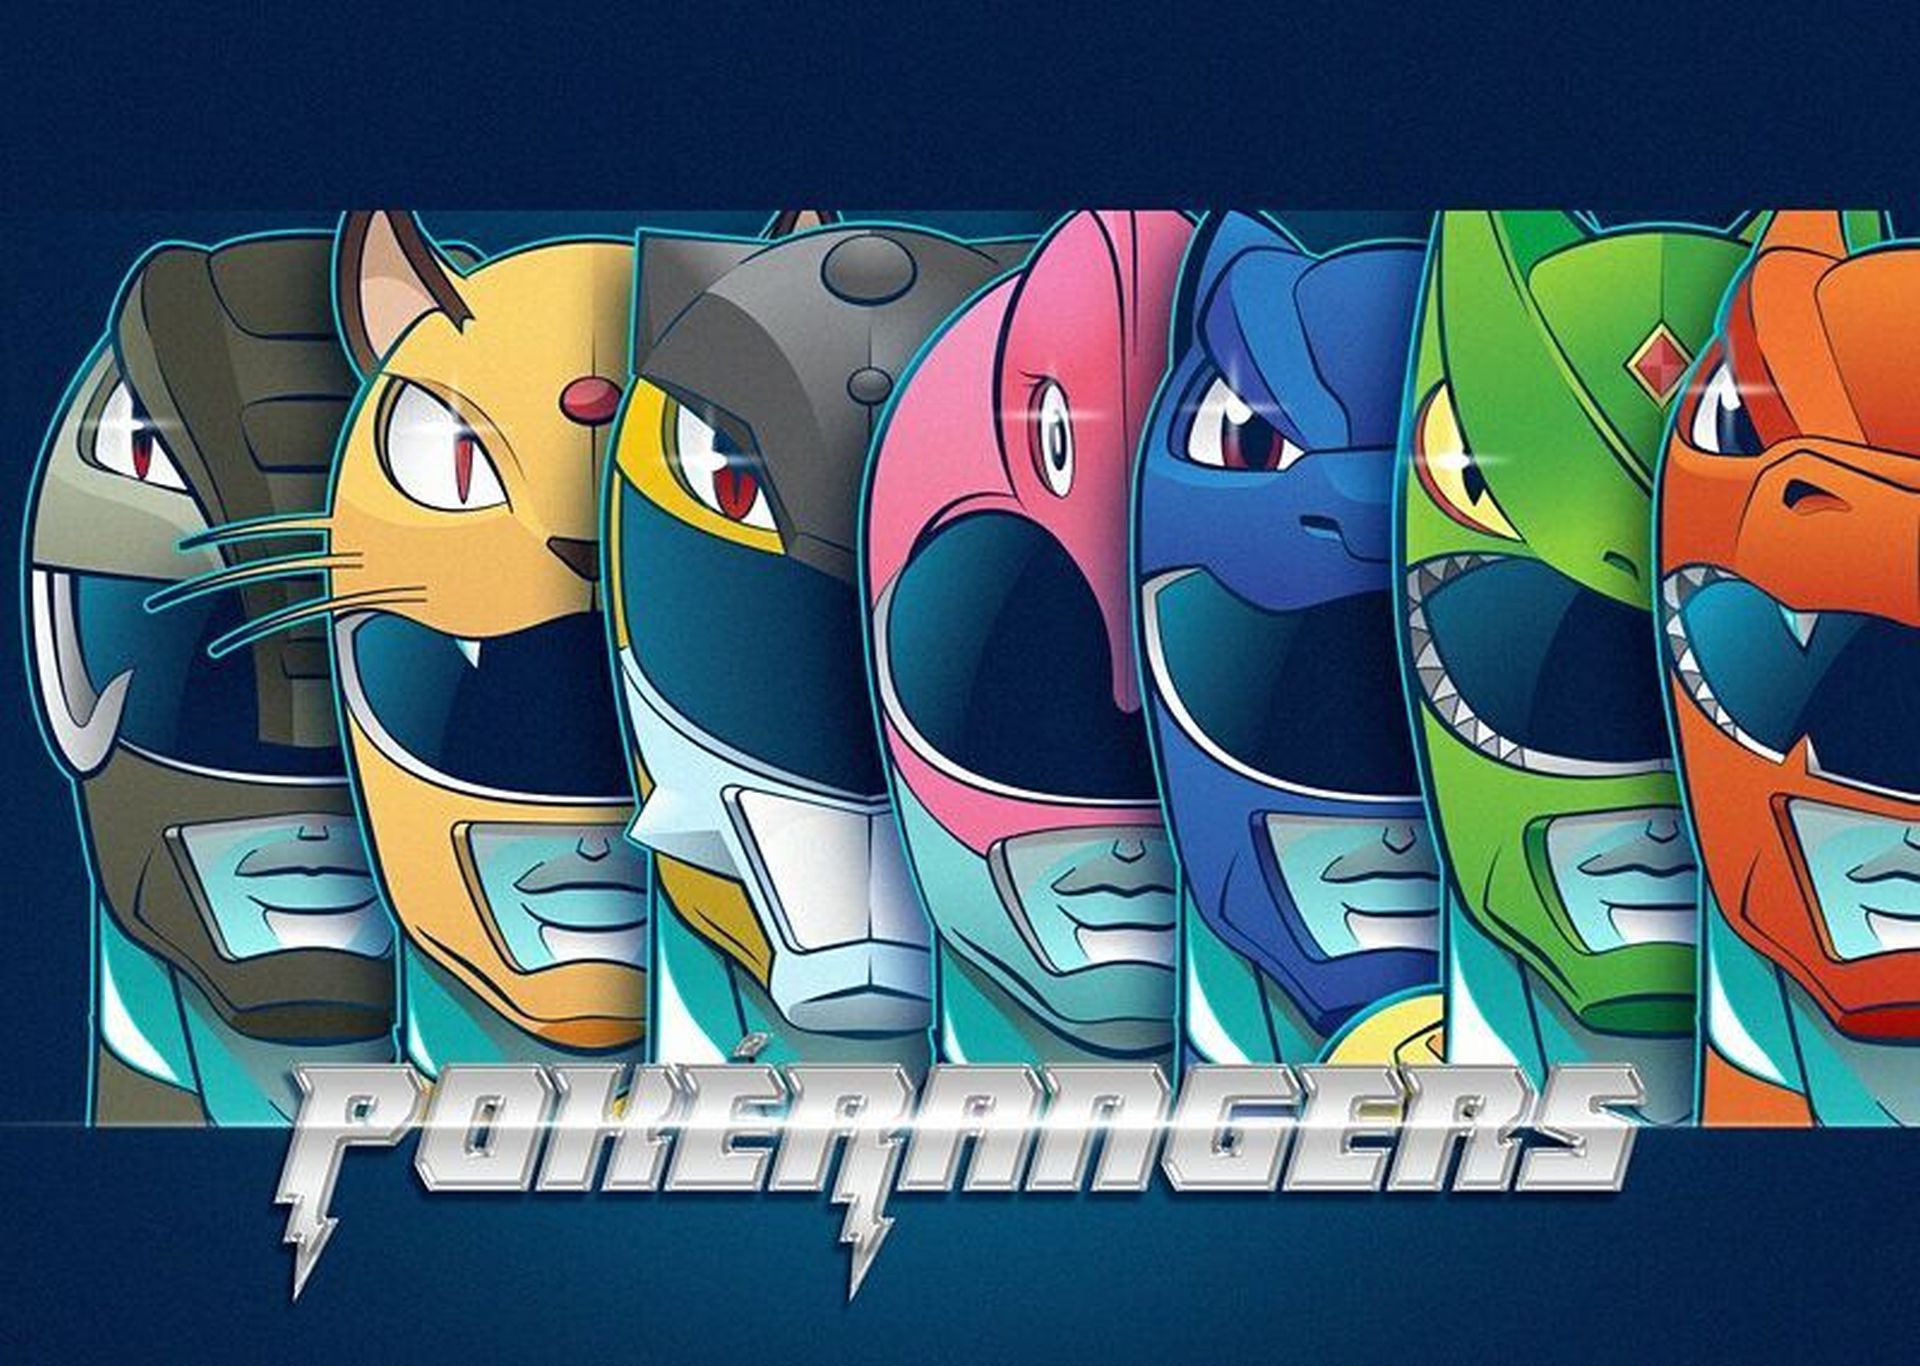 Actual Canal Inapropiado Fan Art Turns the Power Rangers into PokeRangers — GeekTyrant